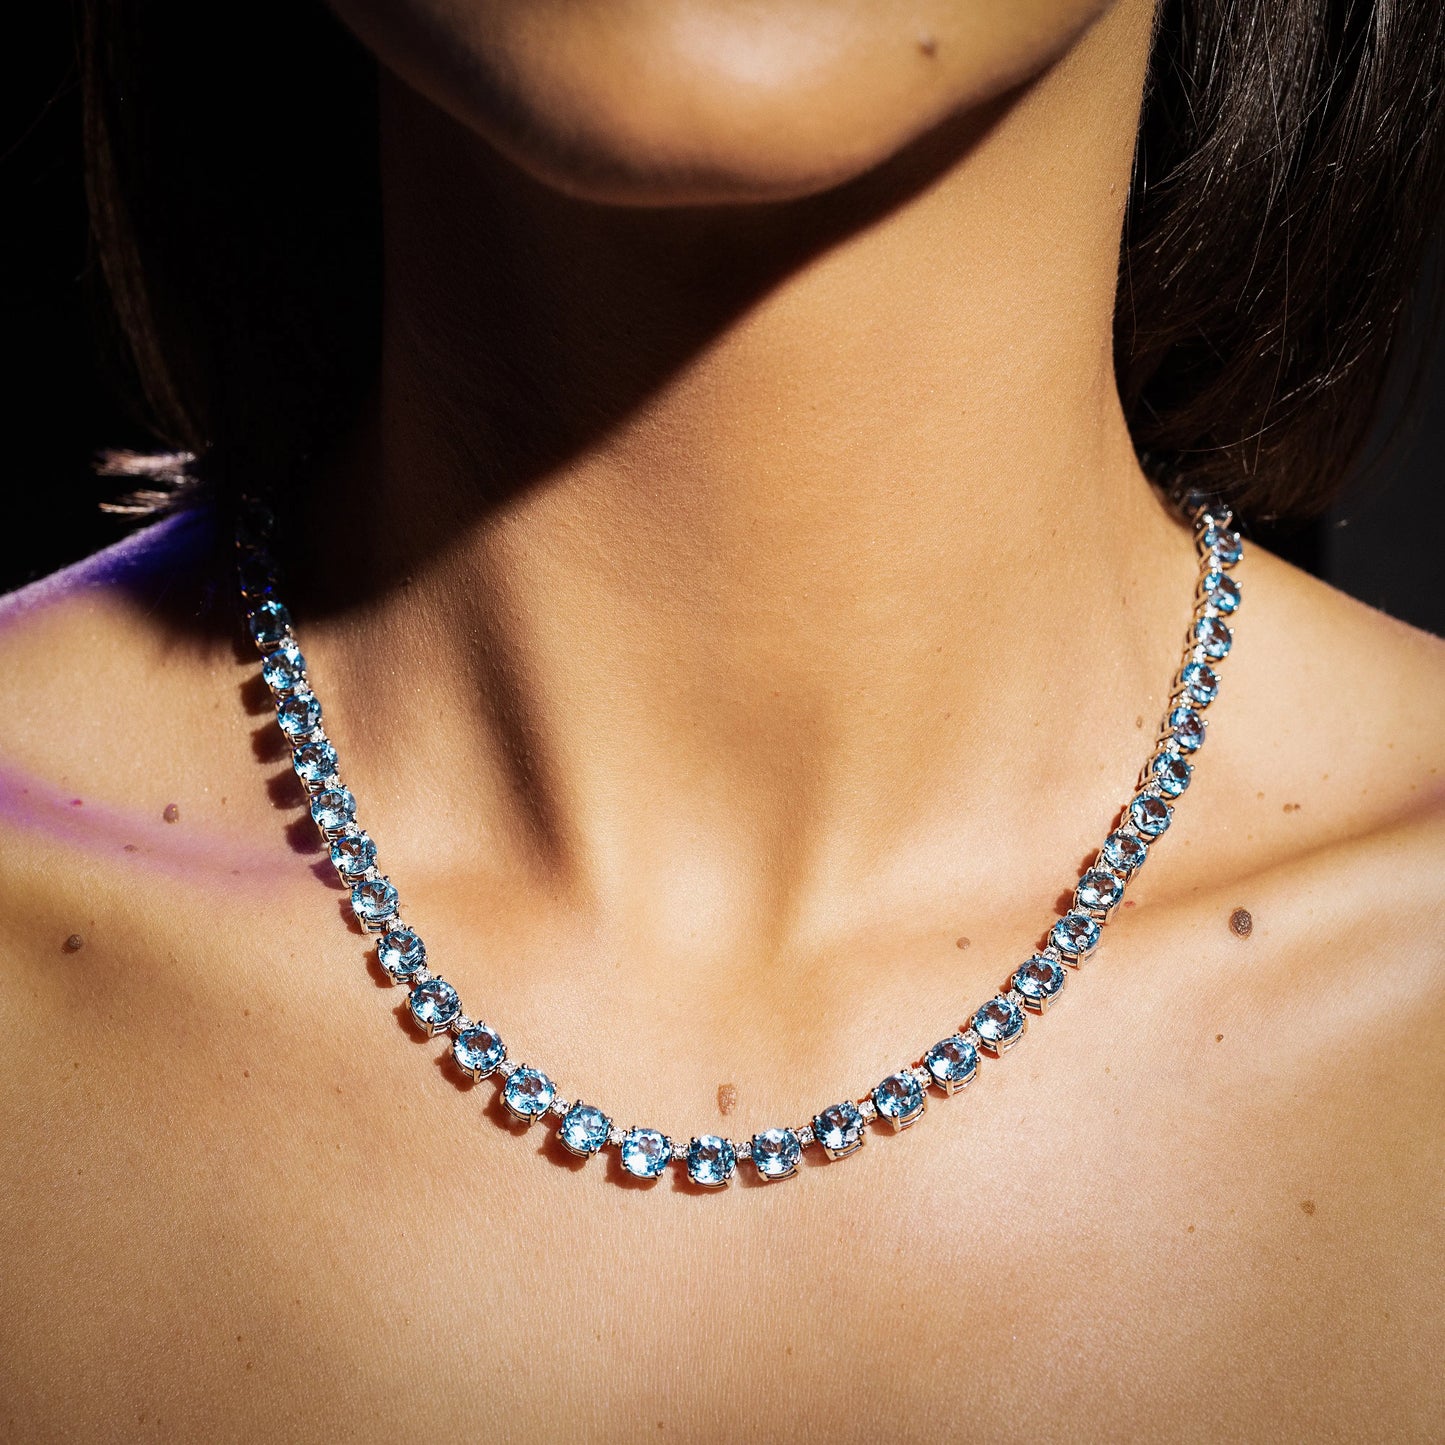 Blue Topaz and Diamonds Necklace Princess Jewelry Shop